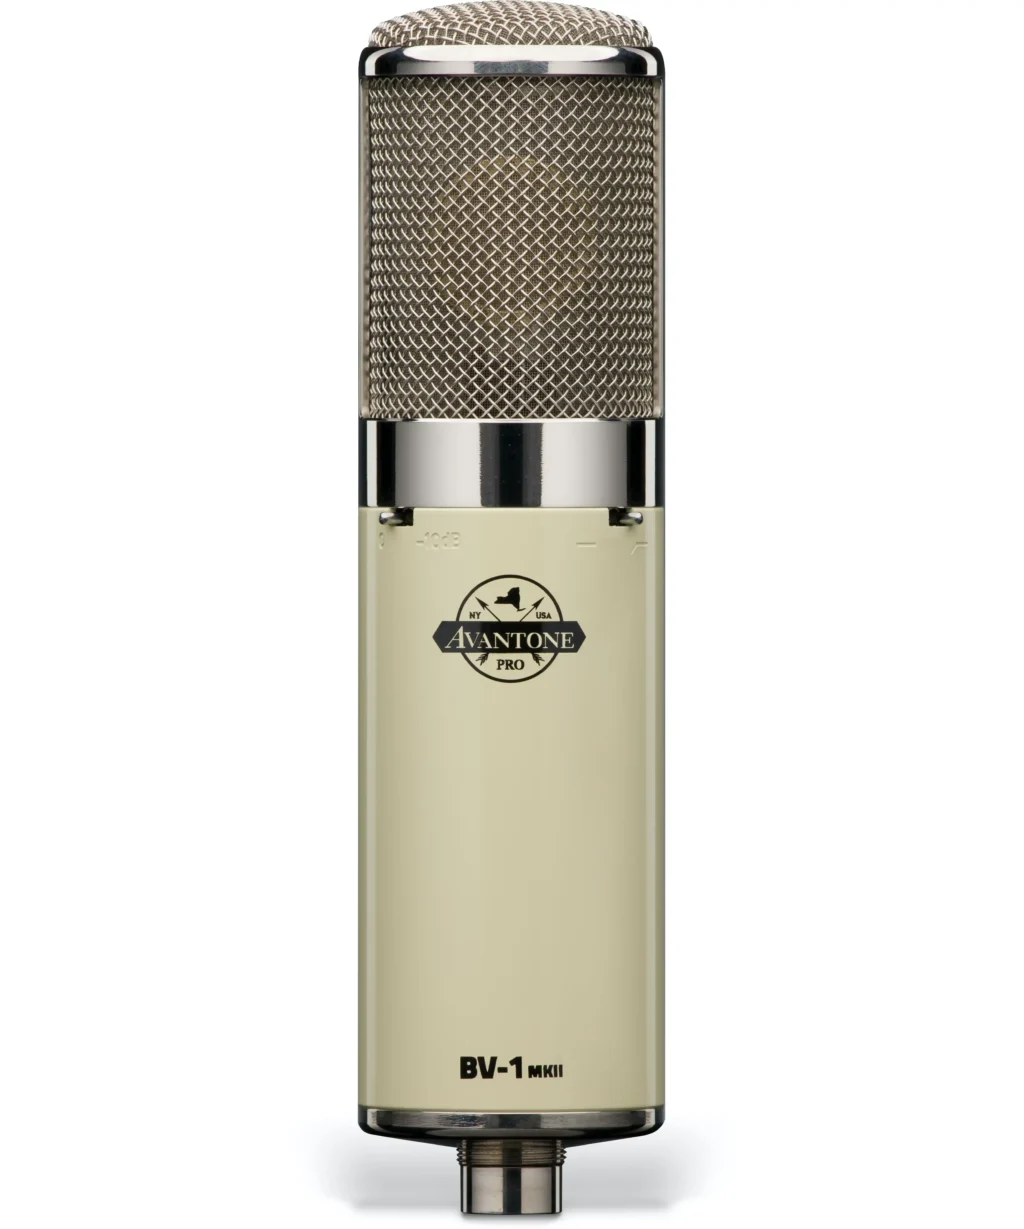 Avantone Bv-1 Mkii Tube Condenser Microphone [3]